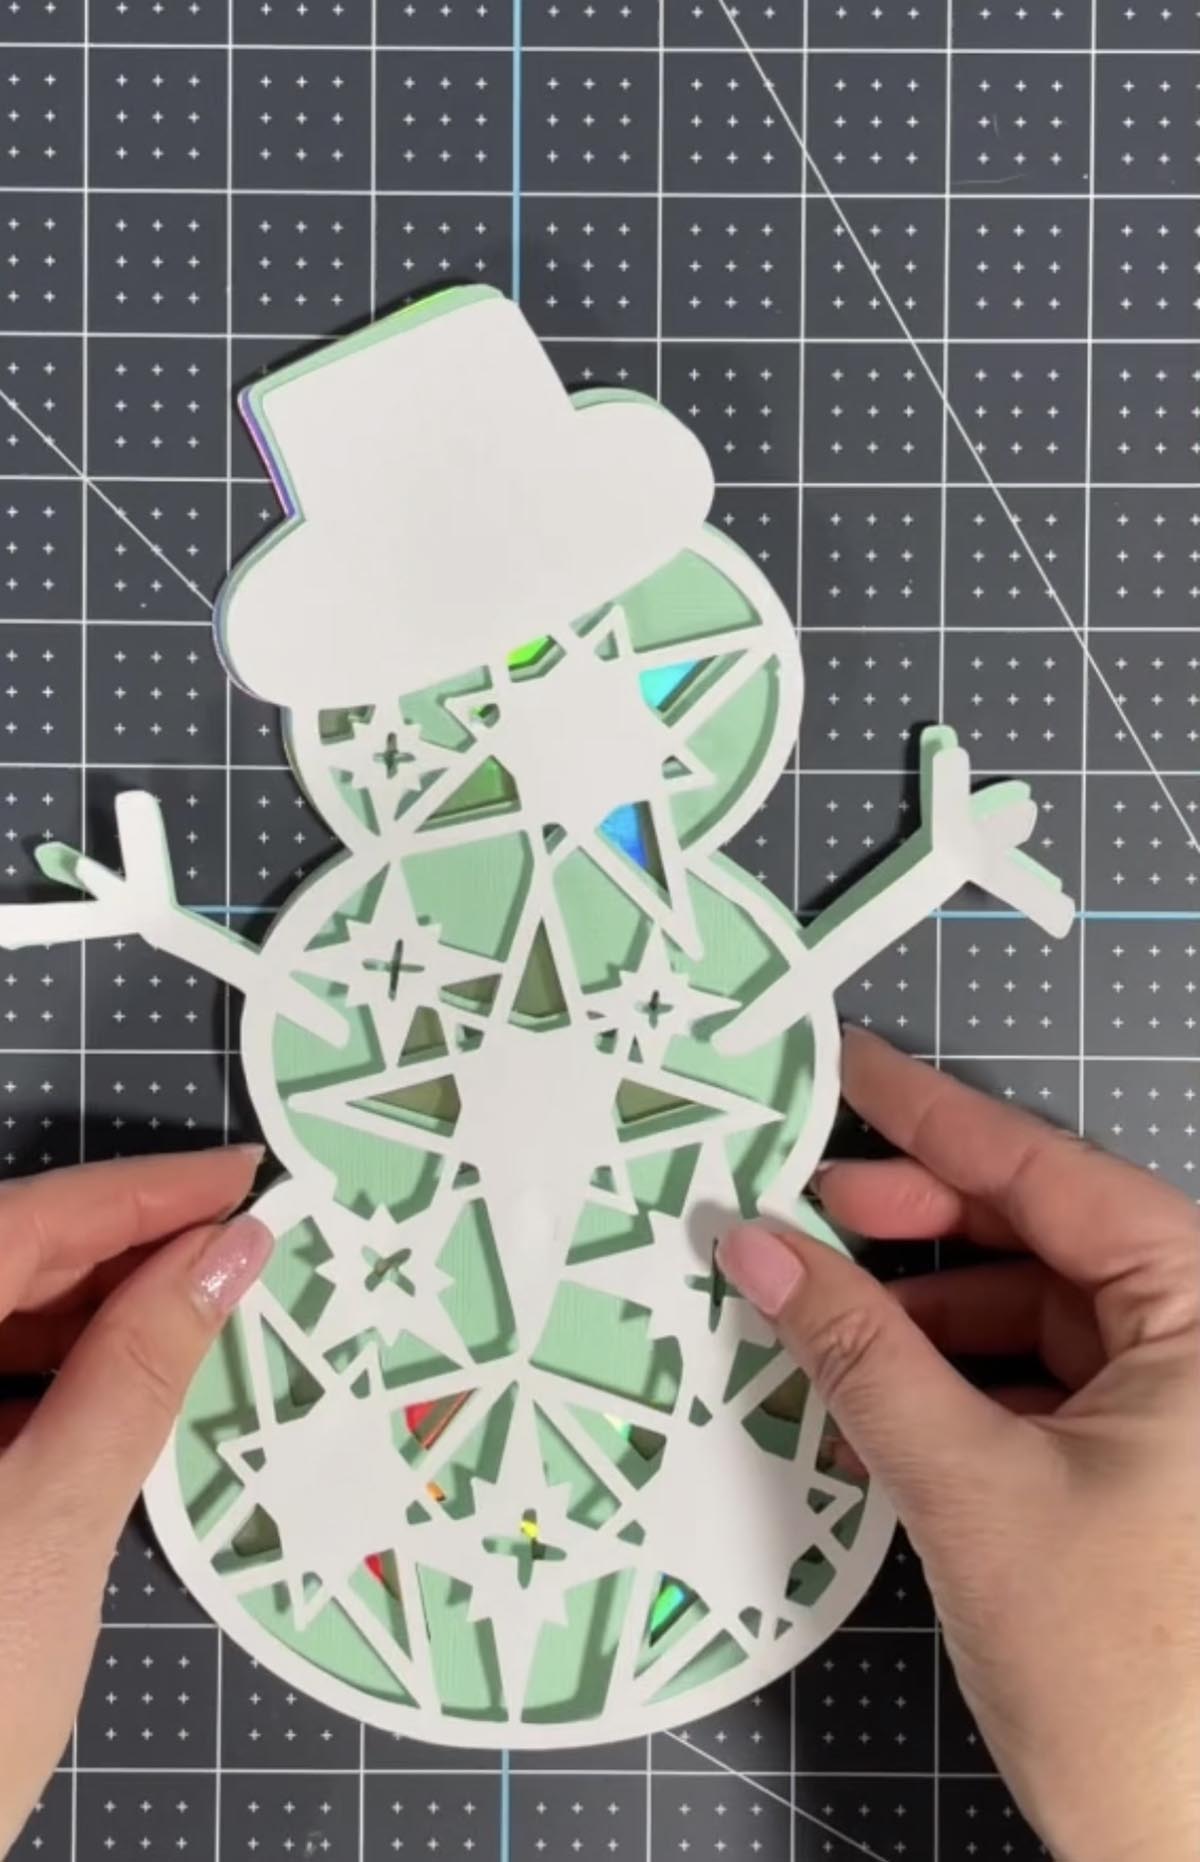 How to build a layered snowman mandala